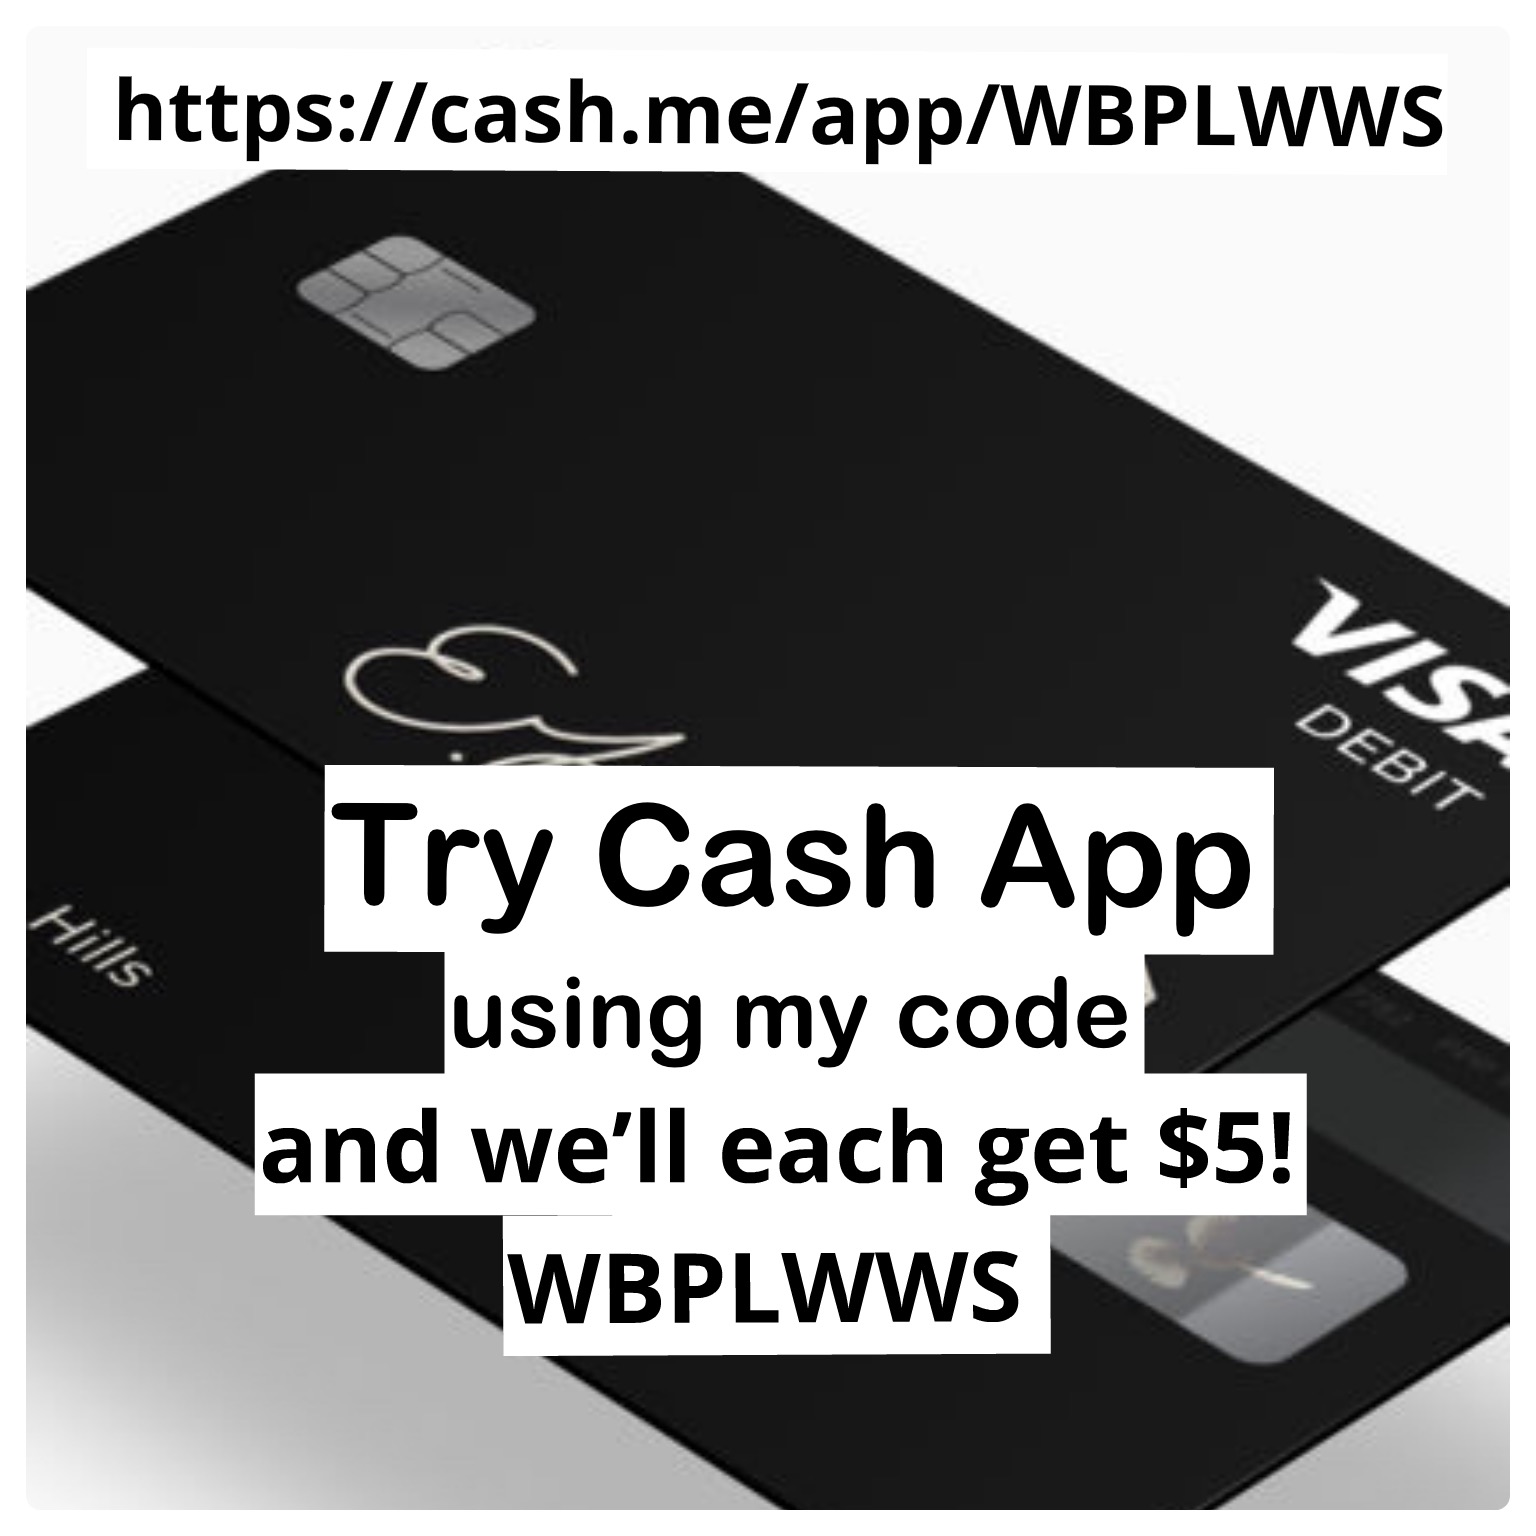 Cash Referral Code